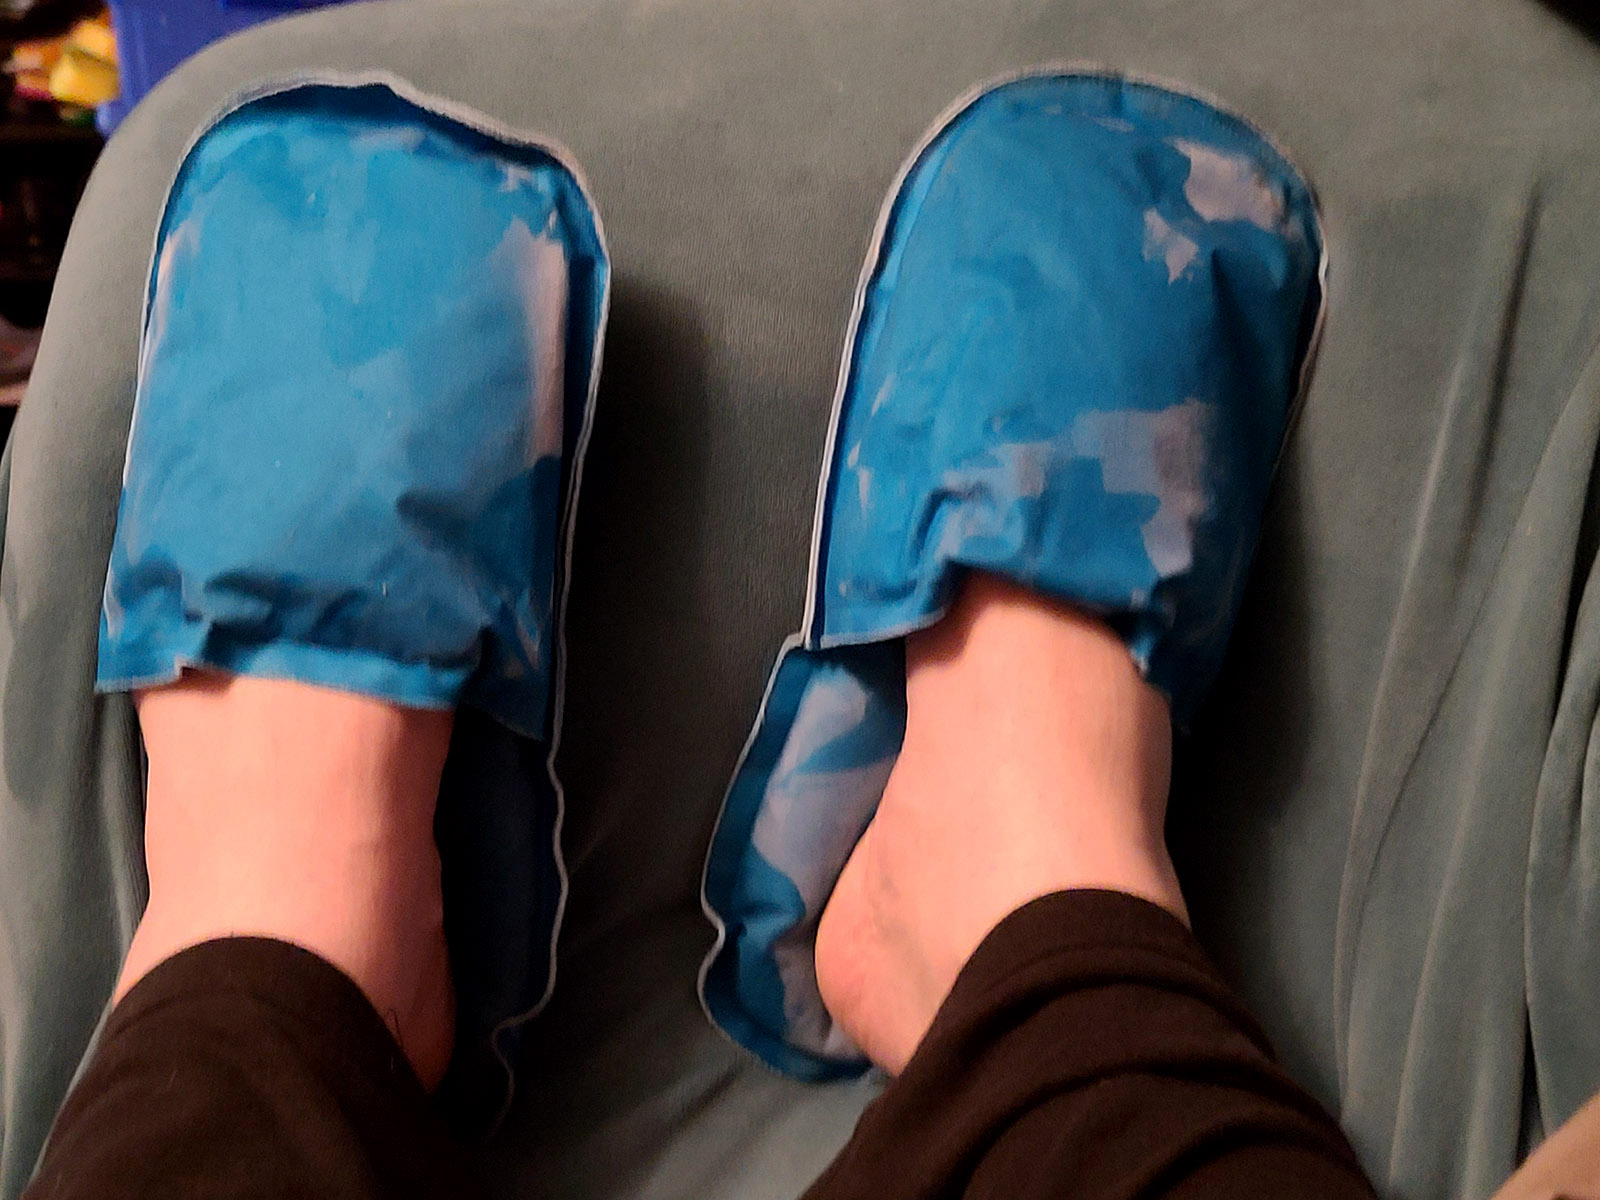 Slipper shaped ice packs on swollen feet.